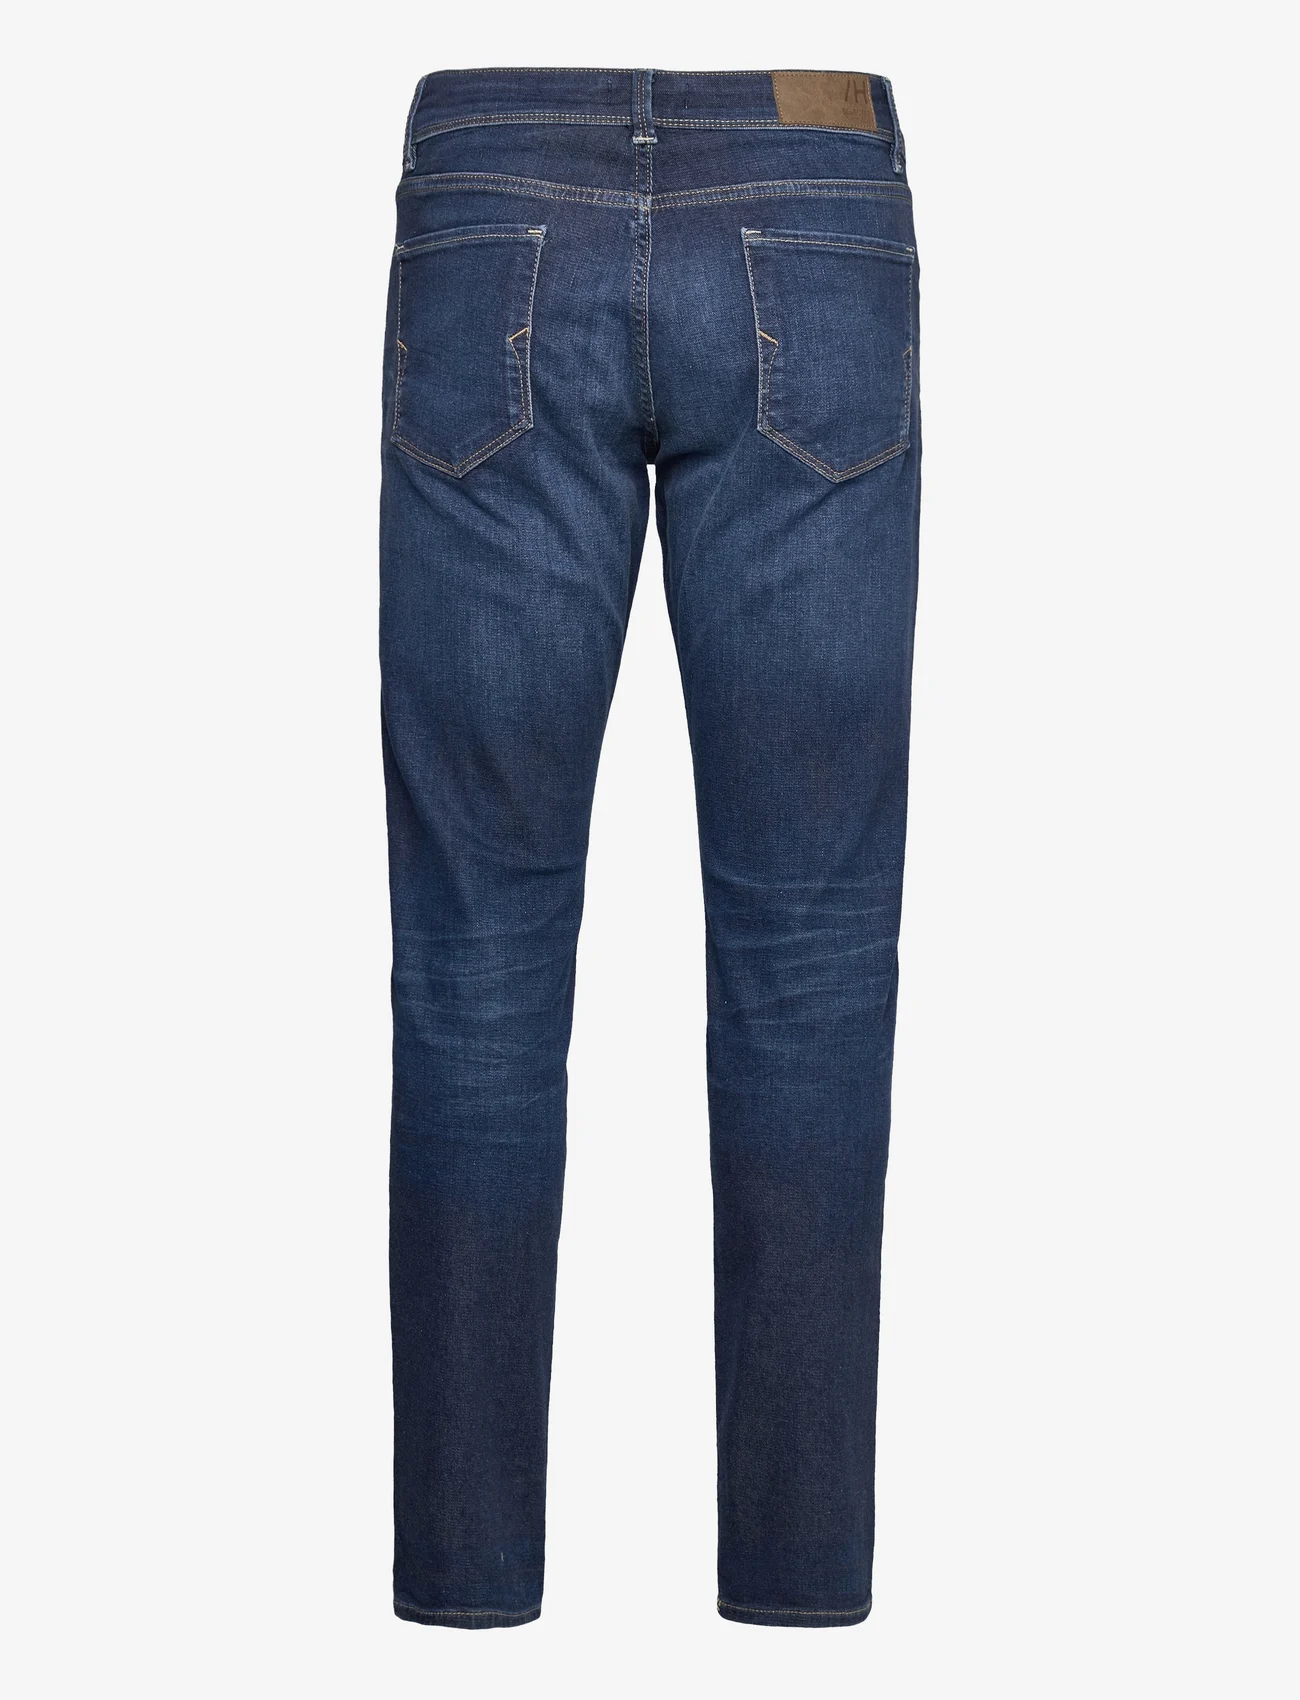 Selected Homme - SLH196-STRAIGHTSCOTT 31604 D.BLUE NOOS - regular jeans - dark blue denim - 1